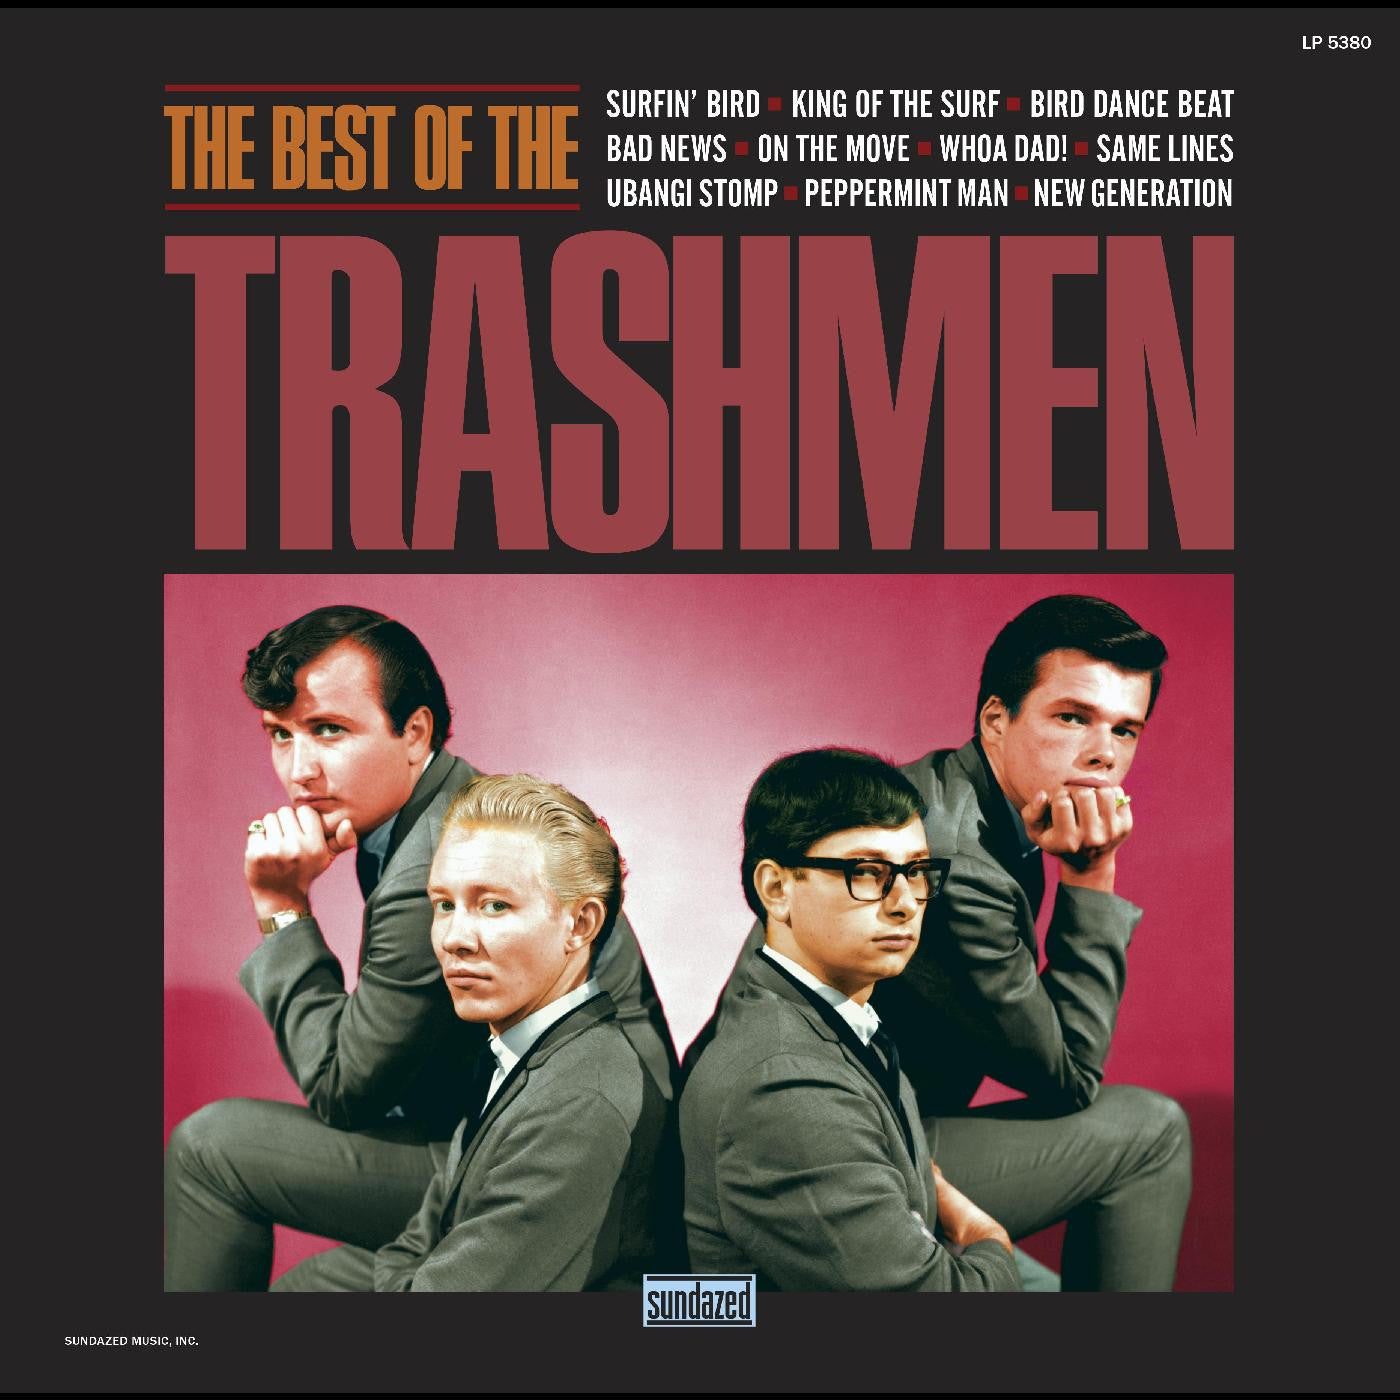 Trashmen - The Best of the Trashmen (Vinyl LP)